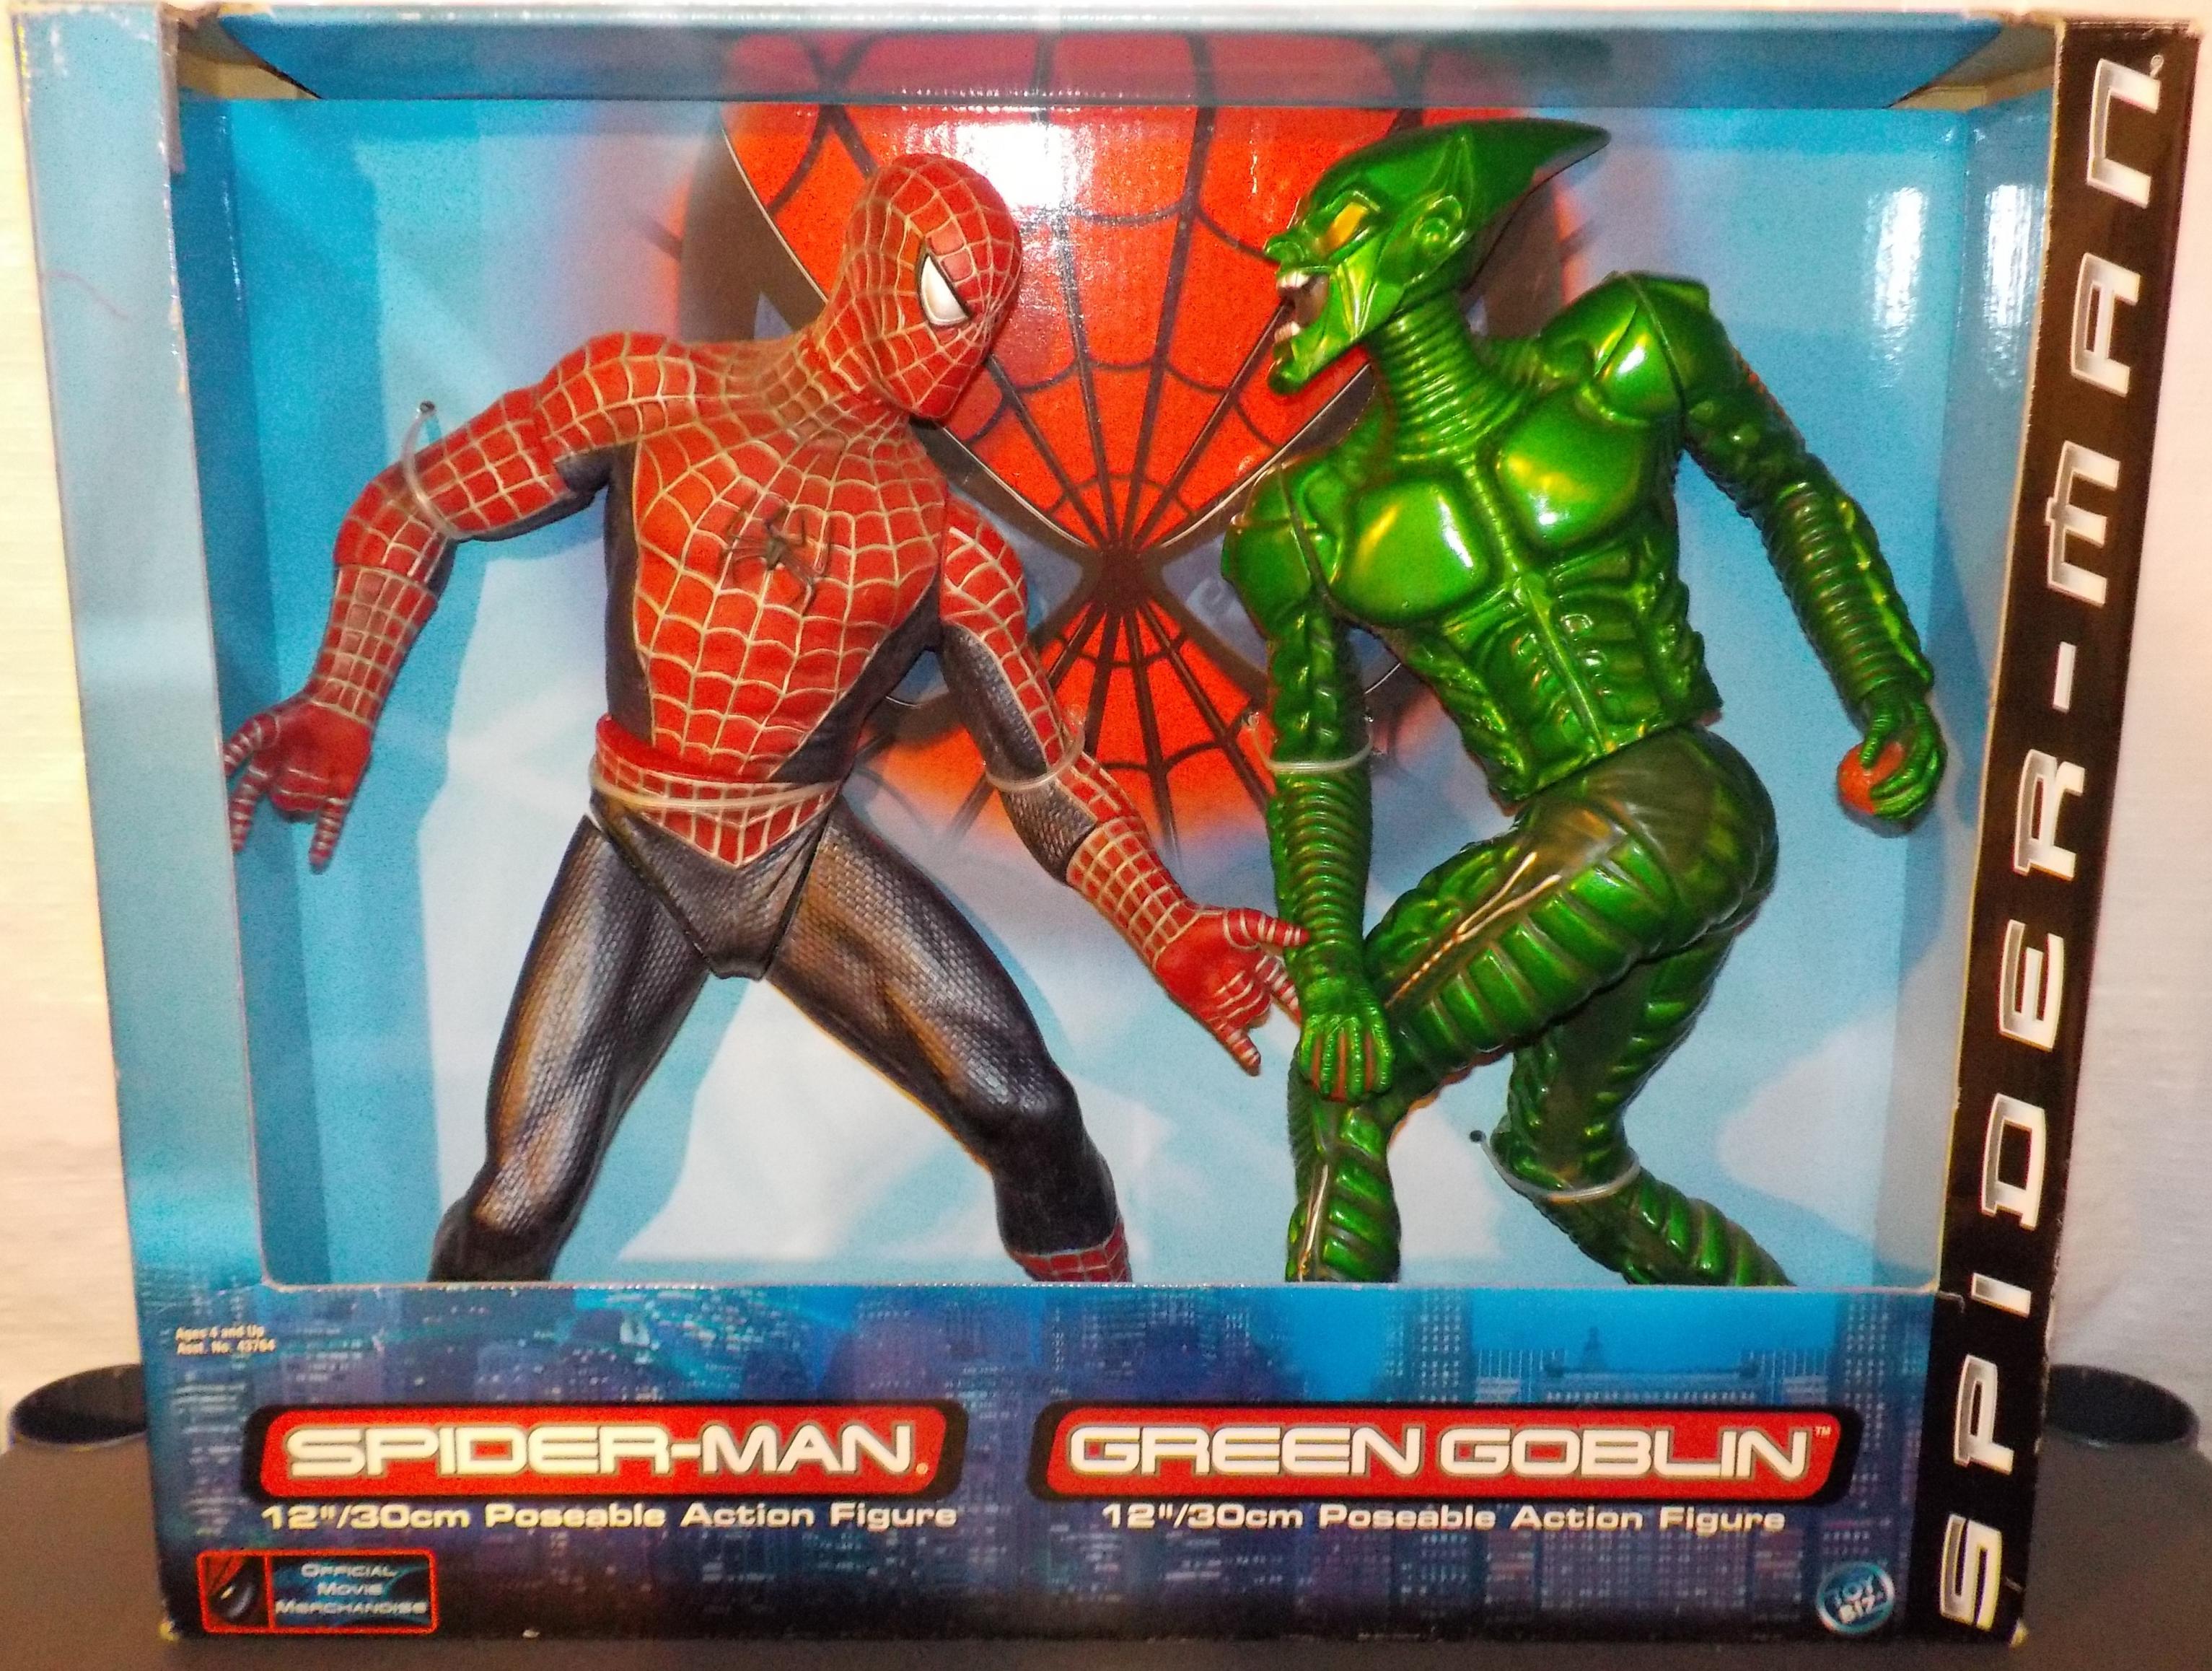 12 Inch Spider-Man vs Green Goblin Action Figures Toy Biz